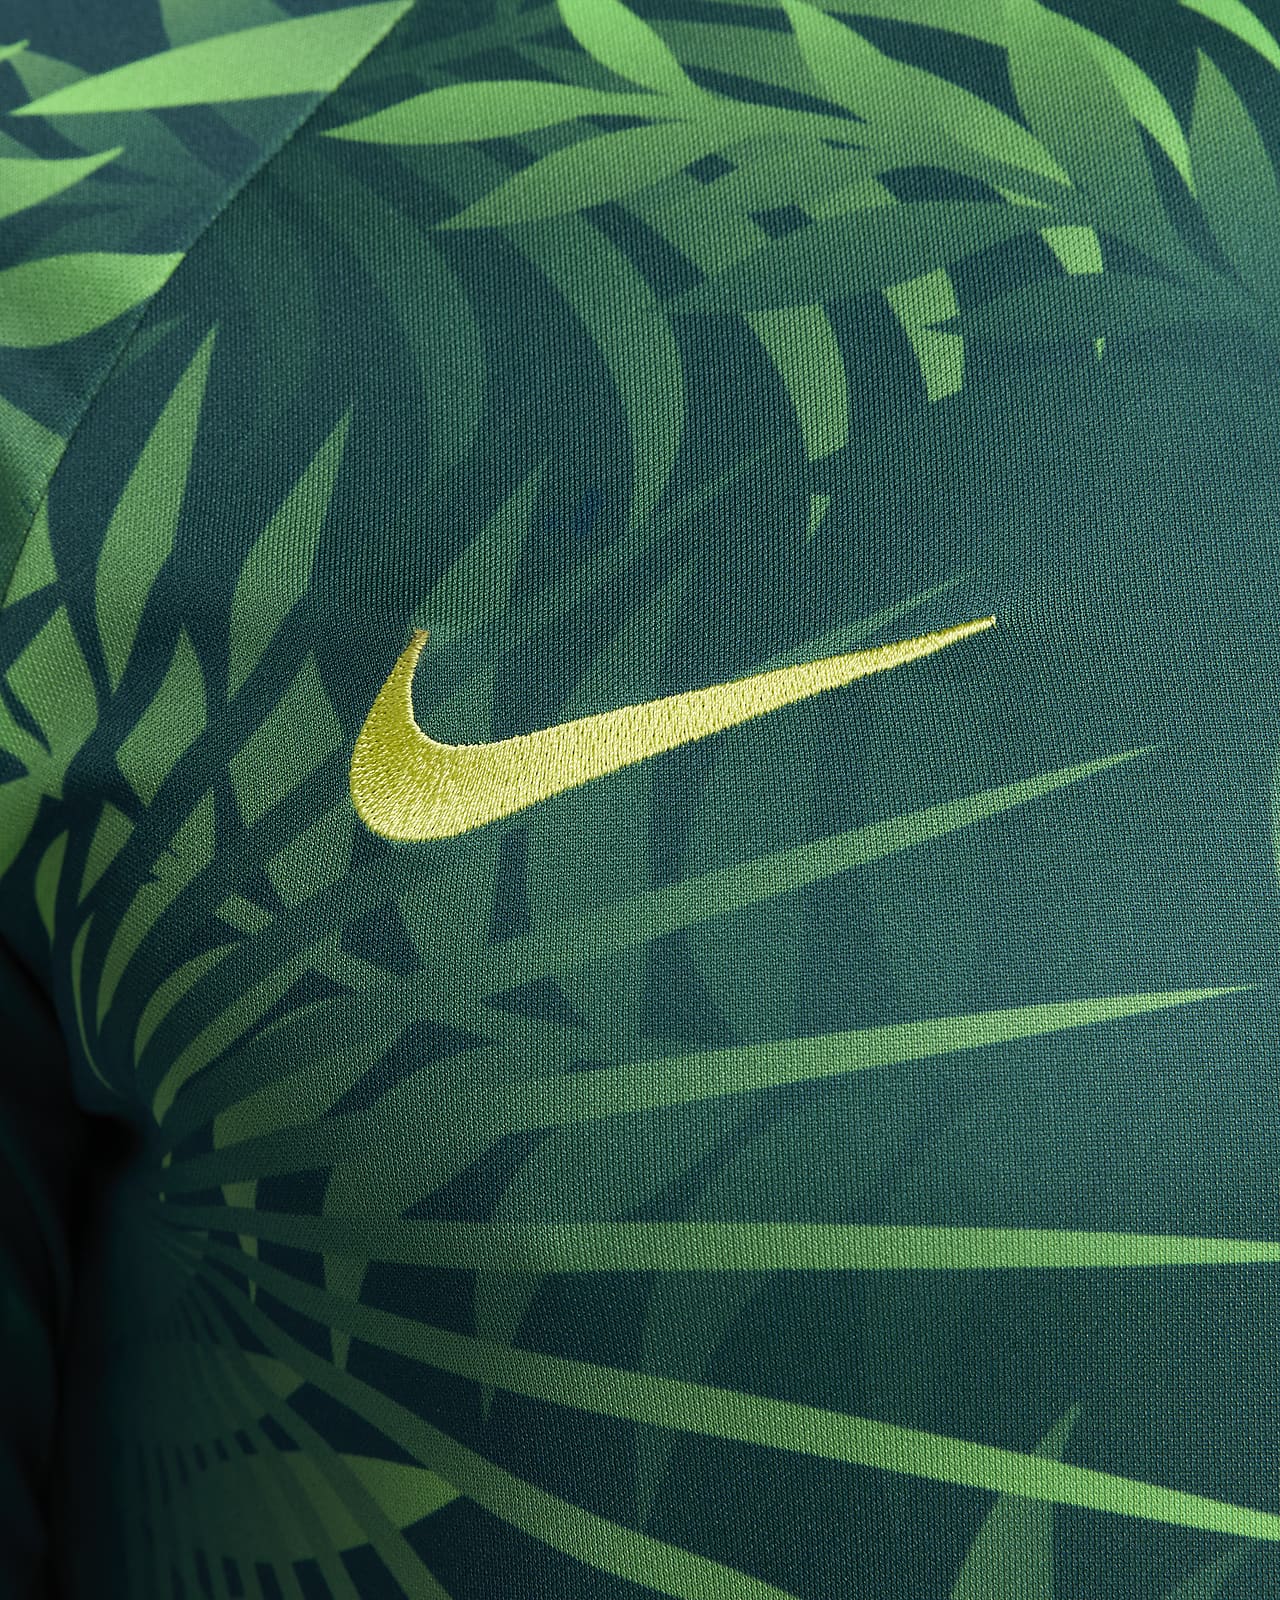 Brazil Academy Pro Men's Nike Dri-FIT Pre-Match Soccer Top.